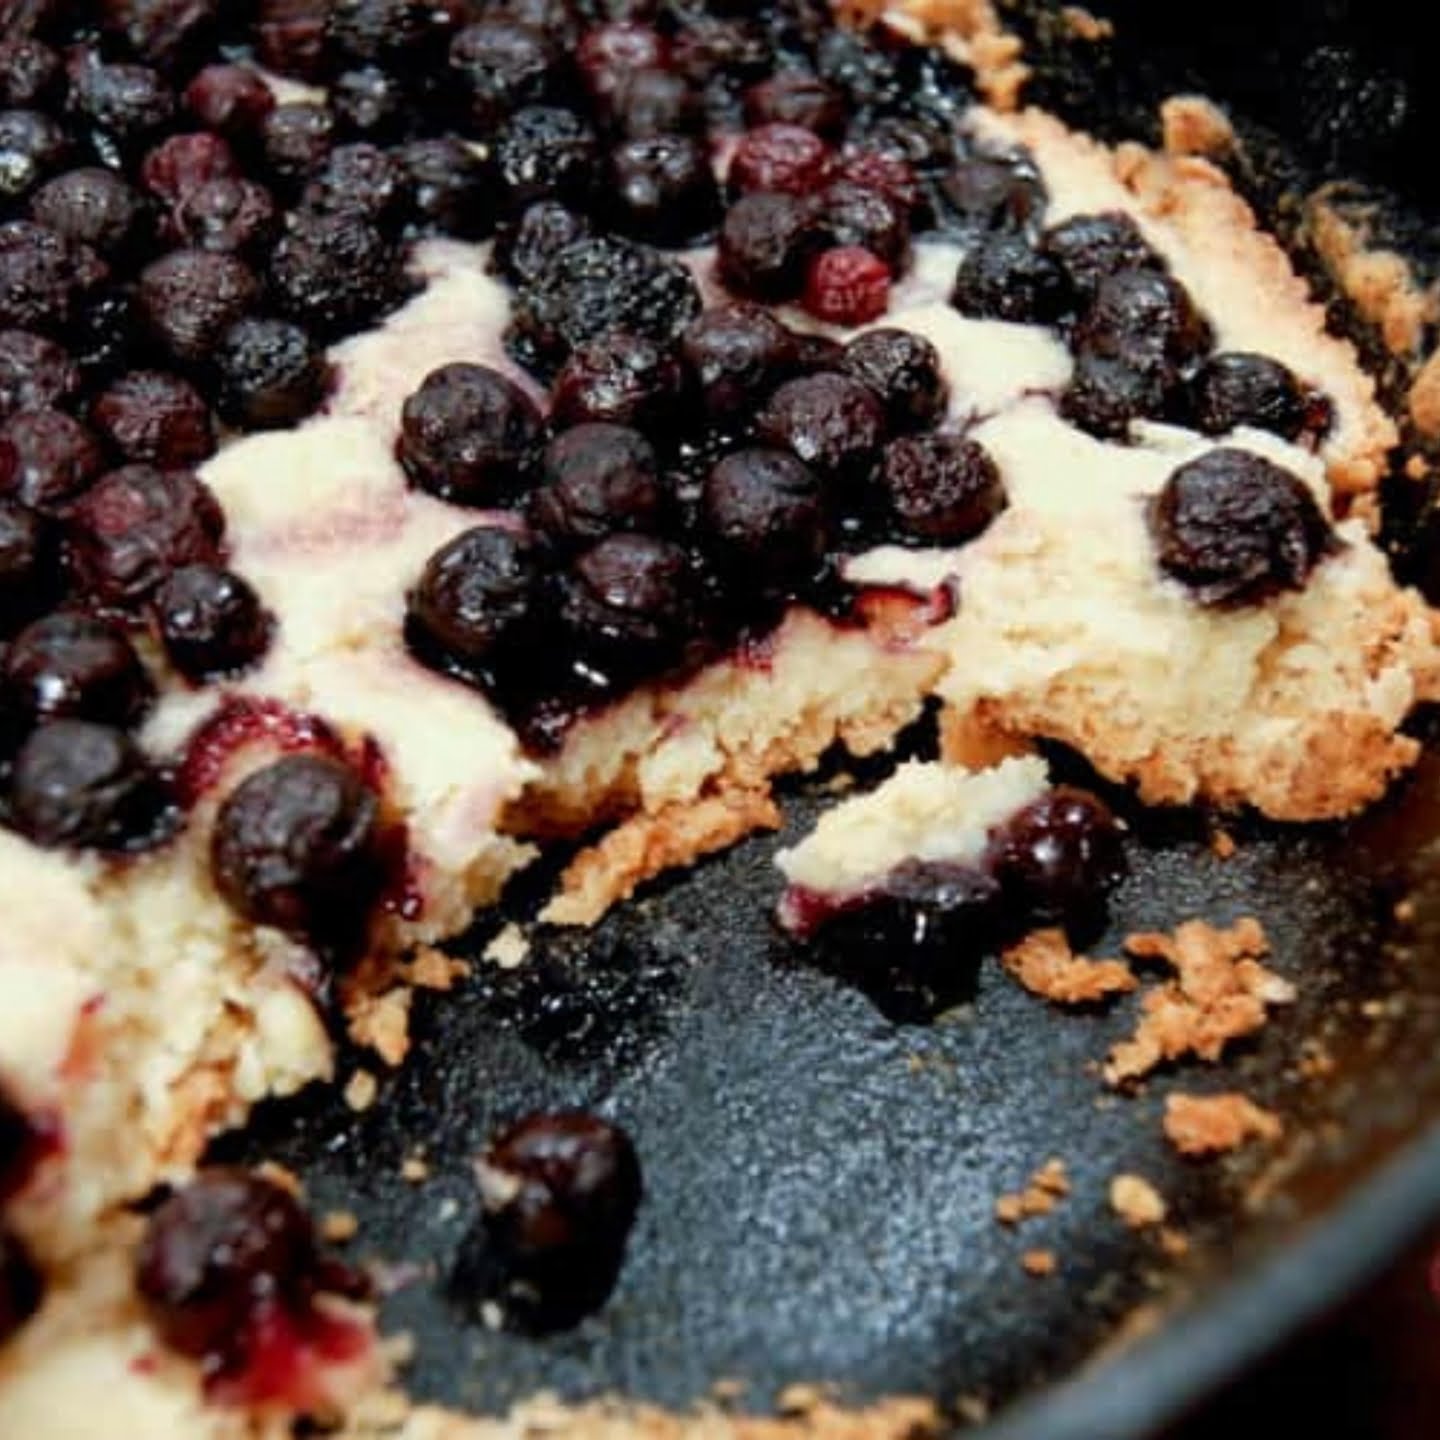 Easy one-dish blueberry cake